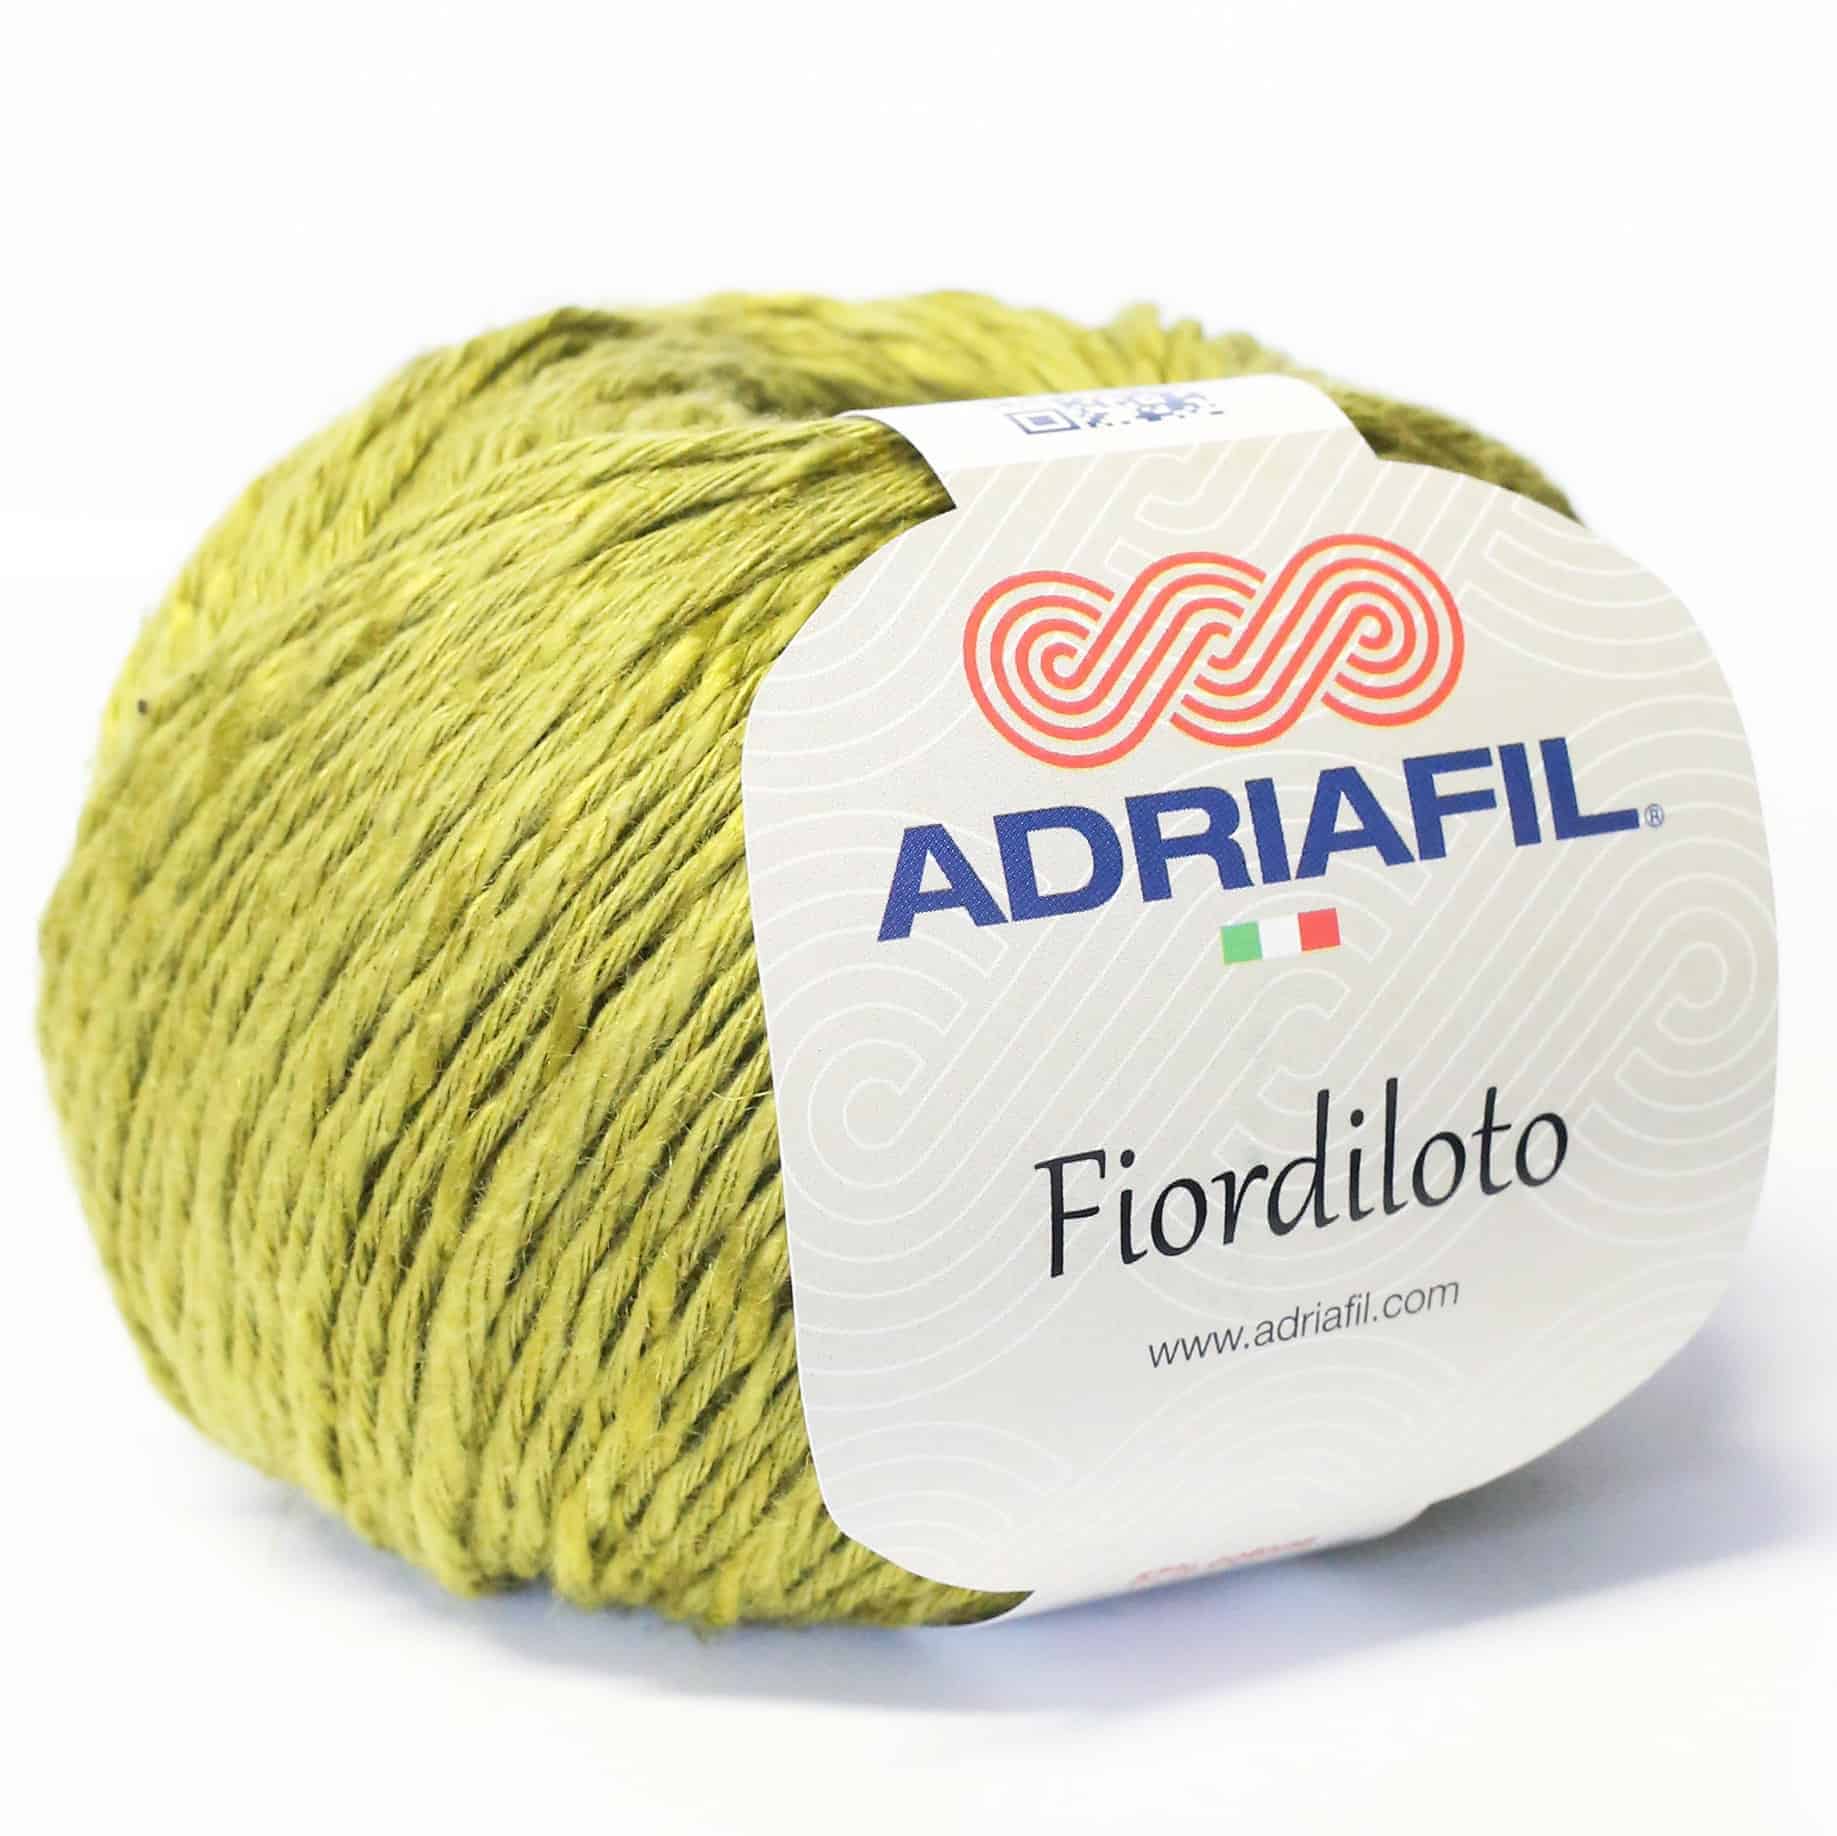 Yarn - Adriafil Fiordiloto 4ply / Dk in Olive Colour 24